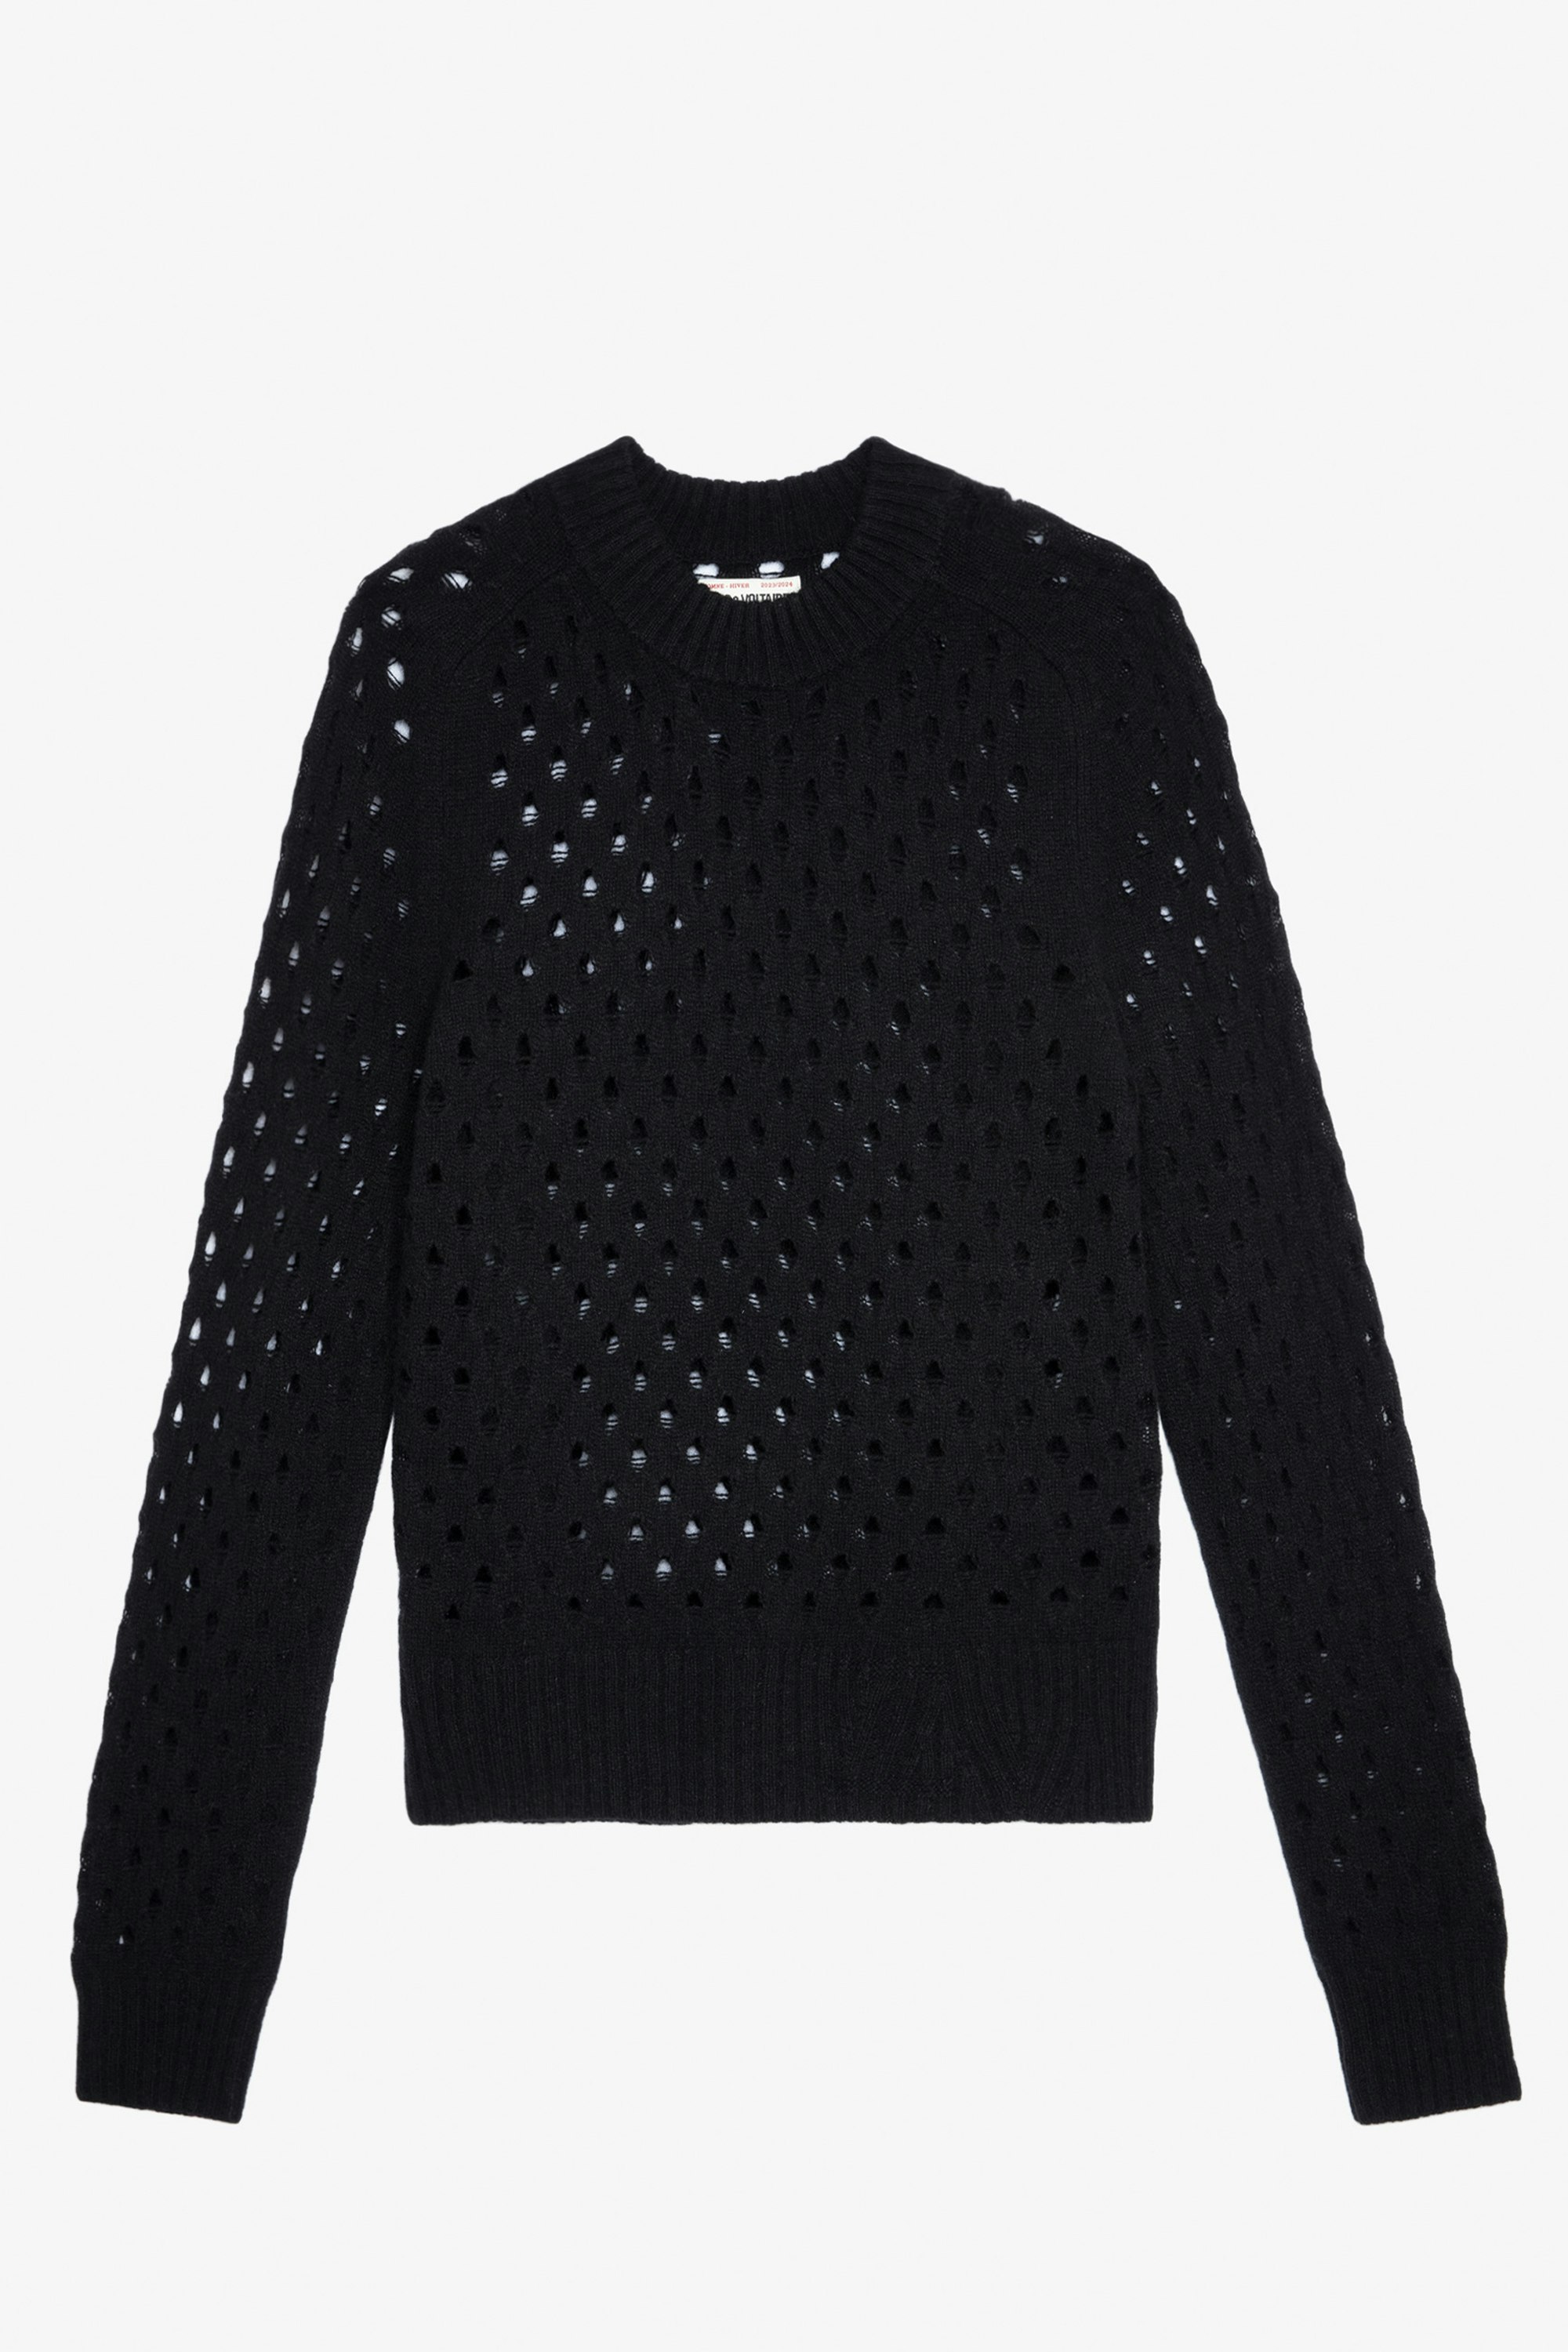 Lili Sweater - Unisex distressed black open knit sweater.